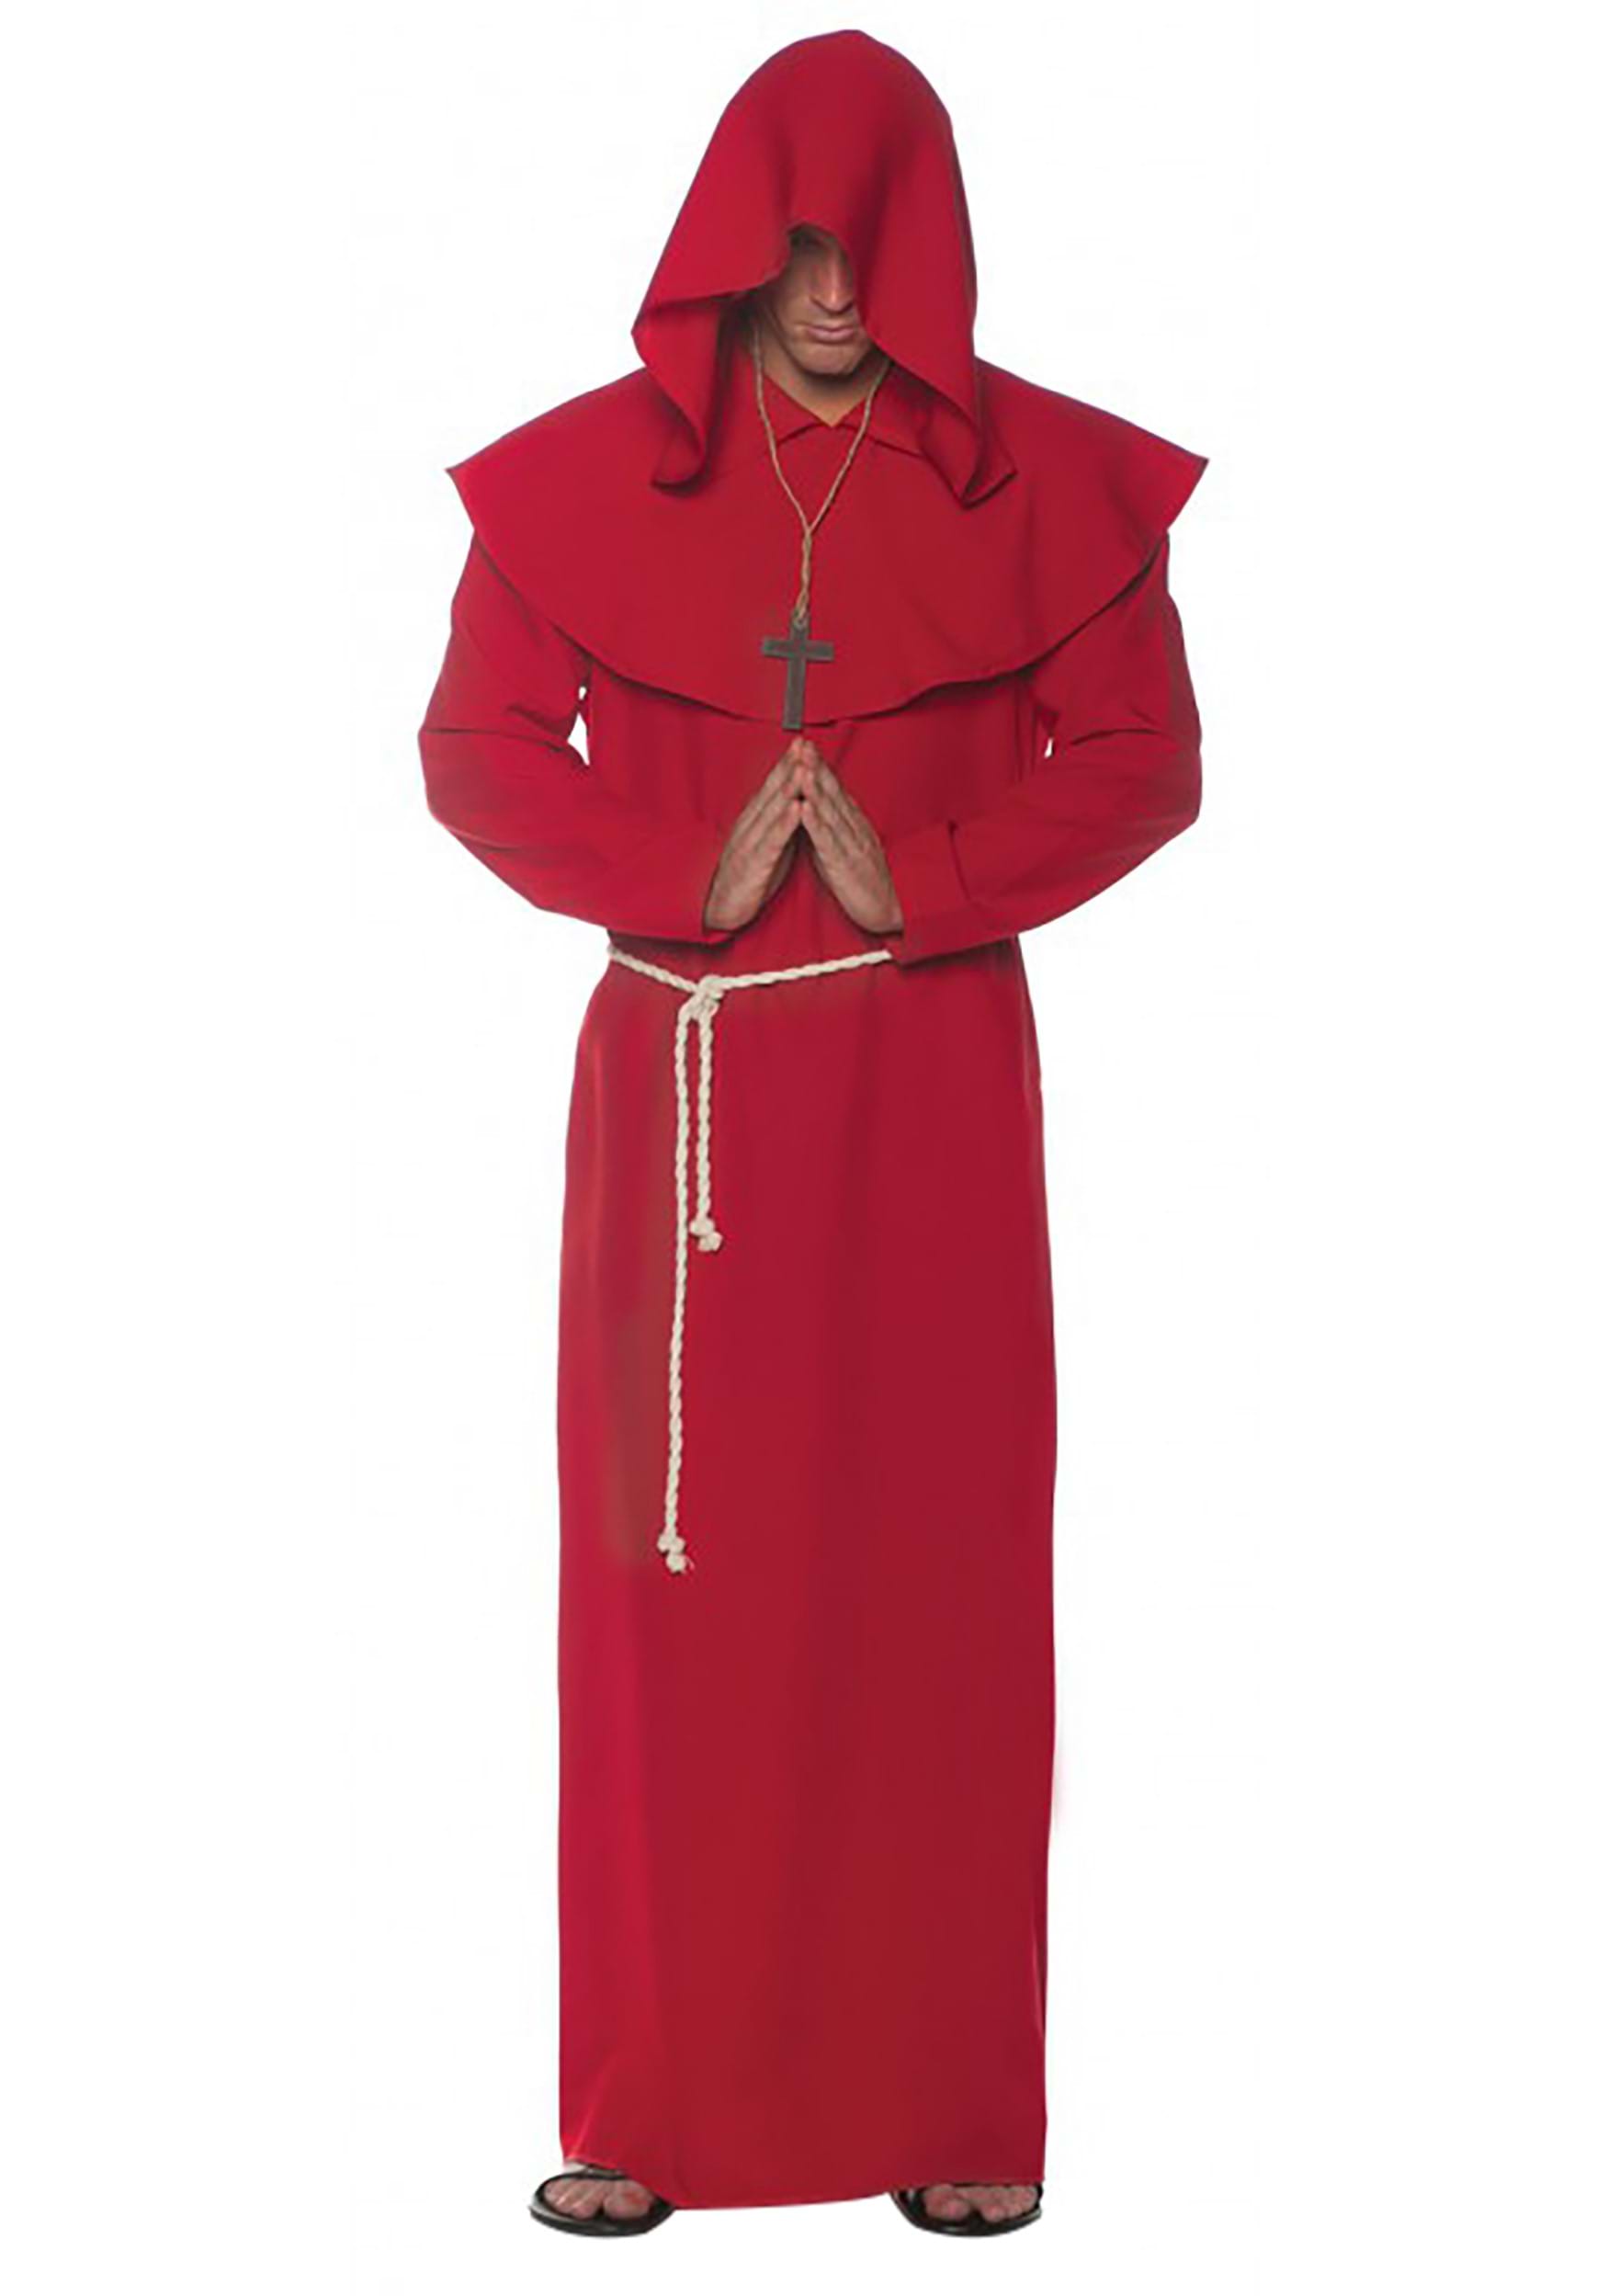 Men’s Red Monk Robe Costume